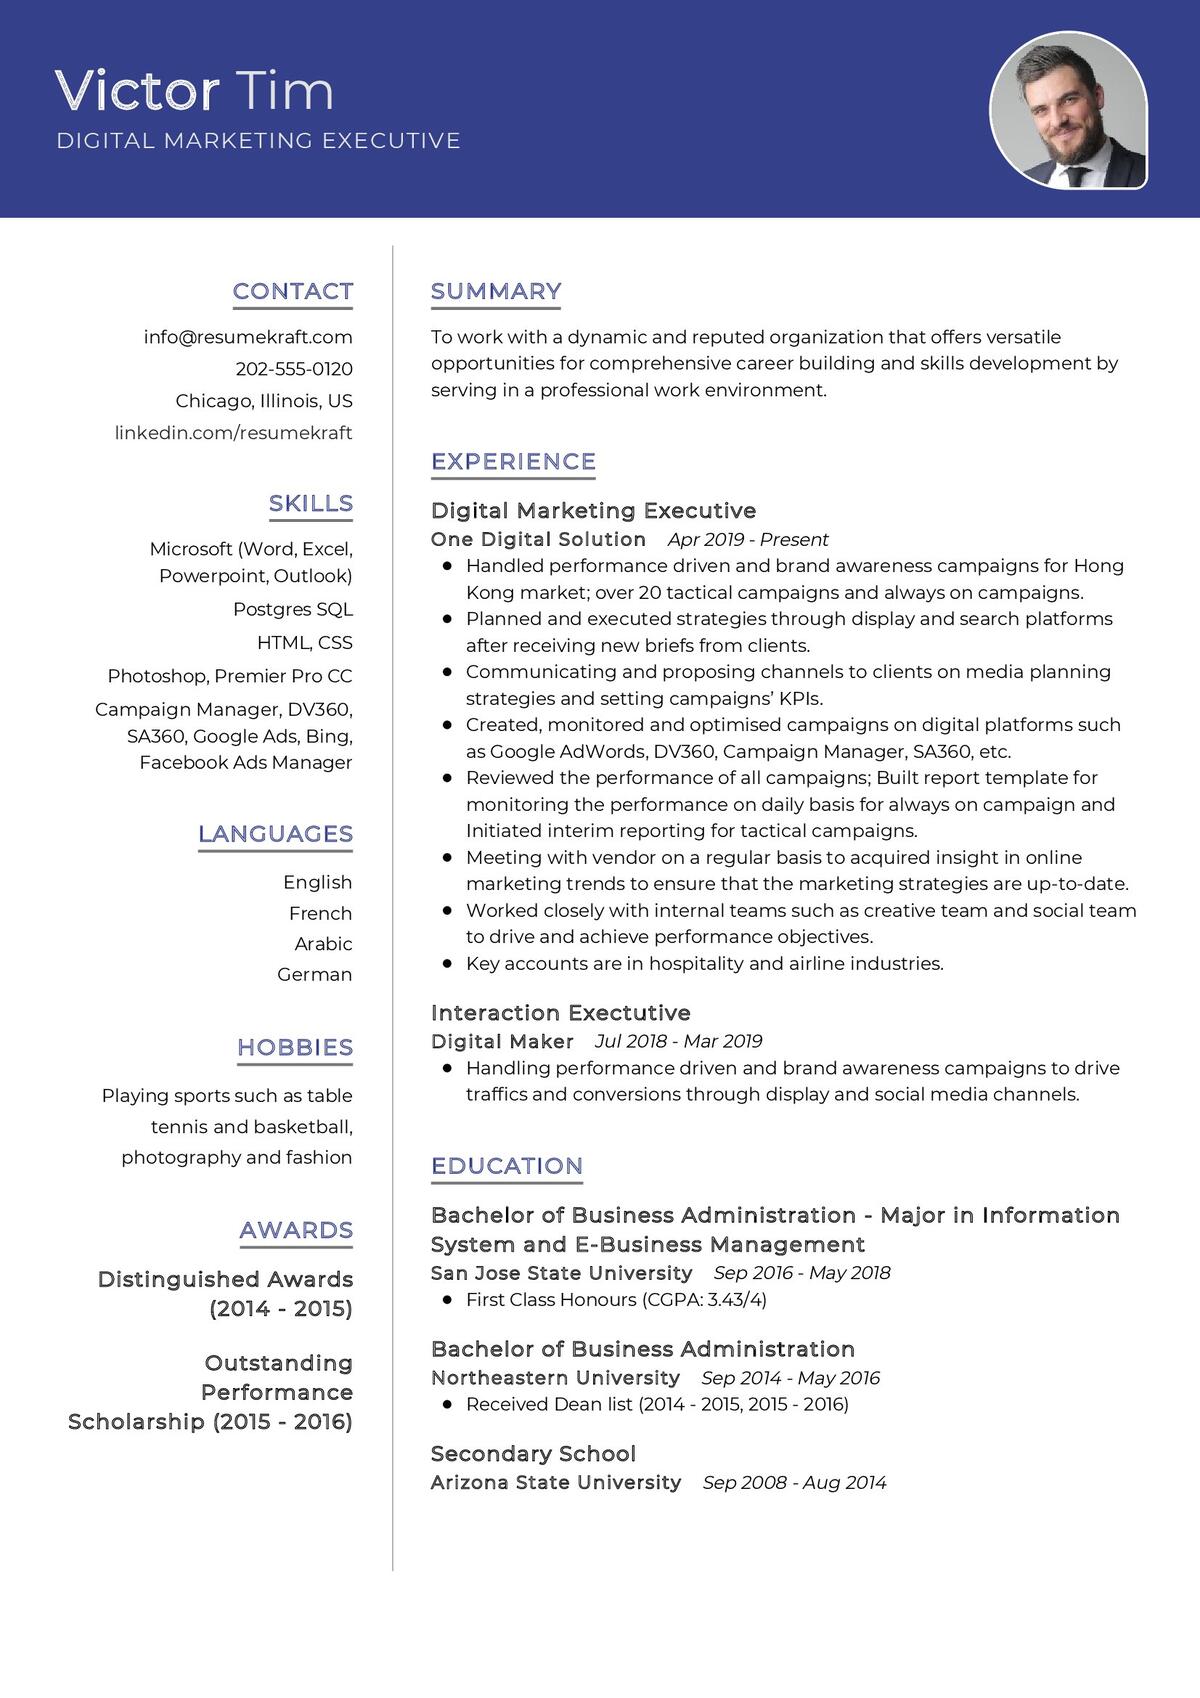 Digital Marketing Executive CV Sample 